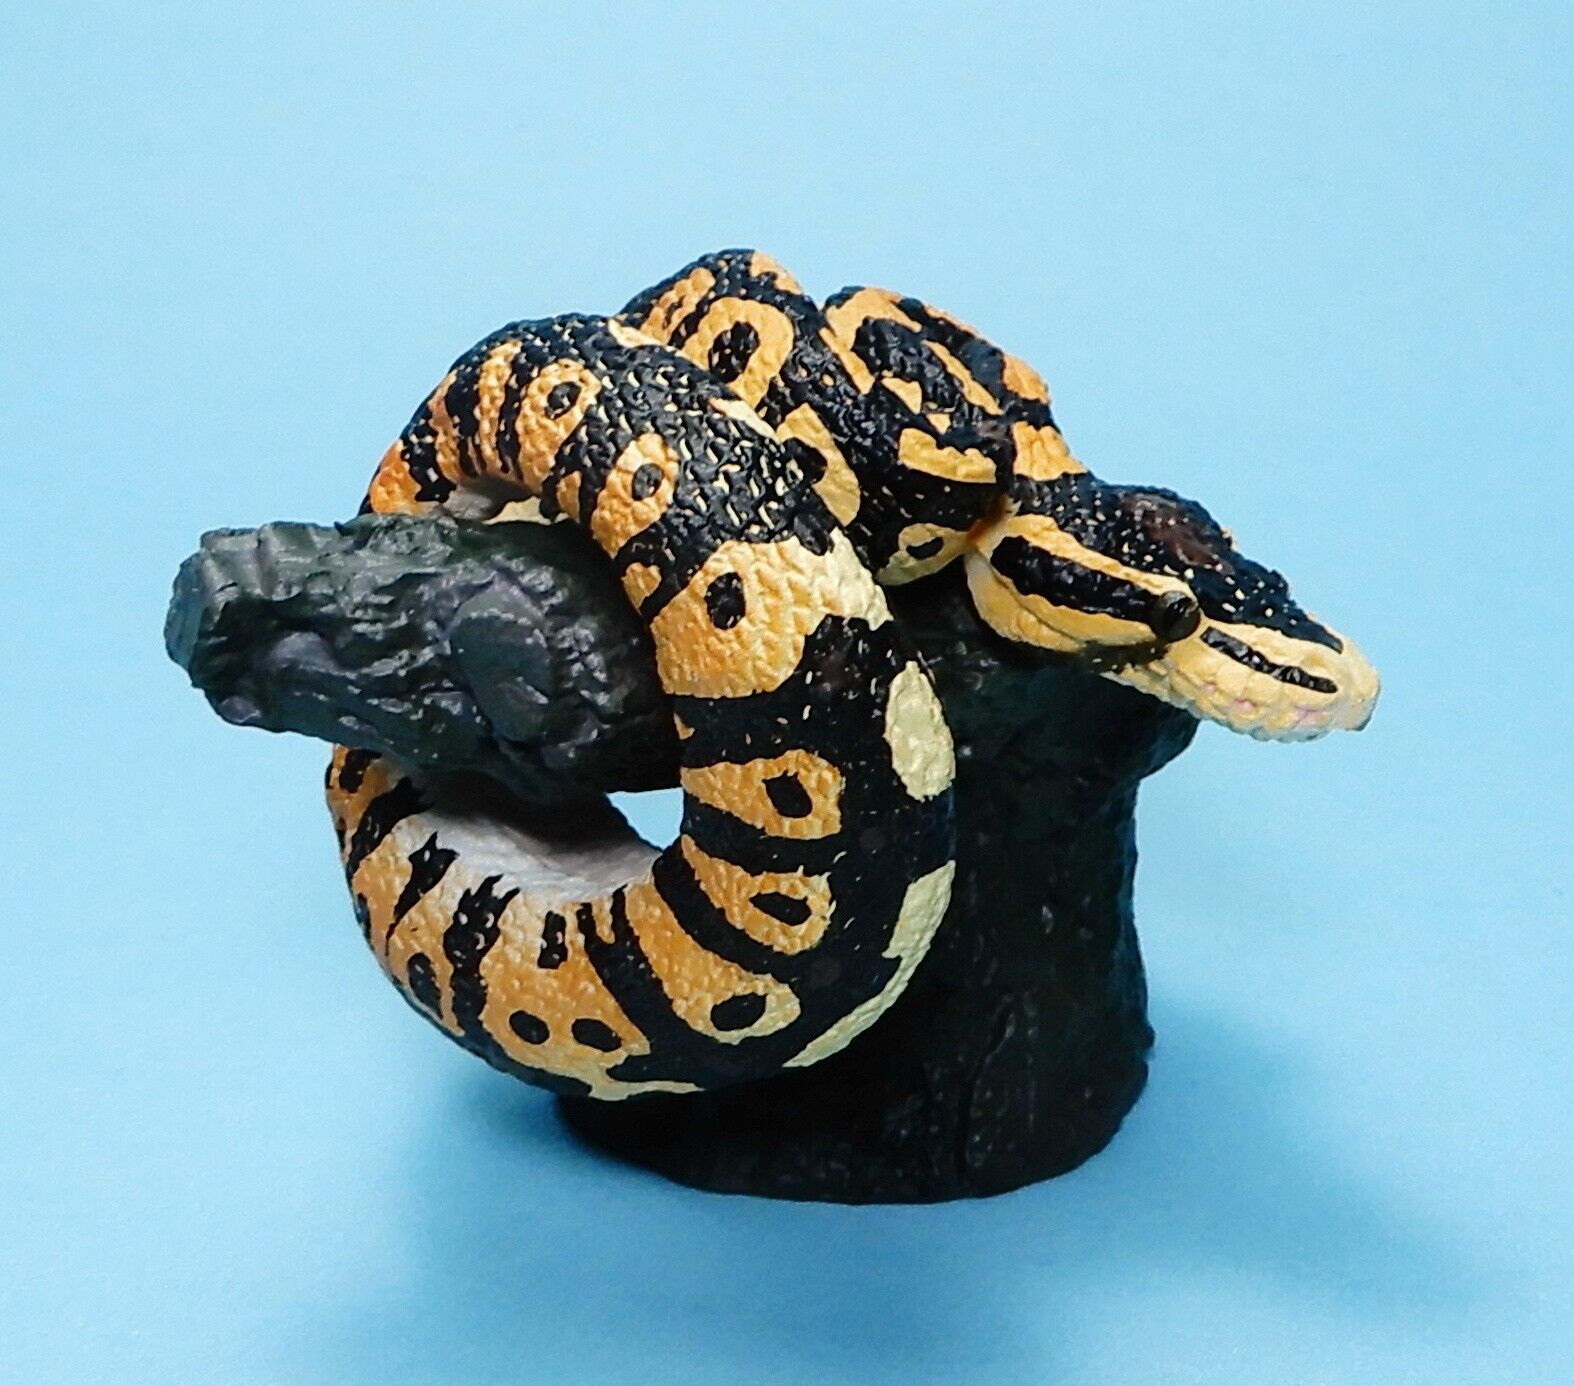 Bandai The Diversity of Life on Earth Pastel ball python snake US seller New